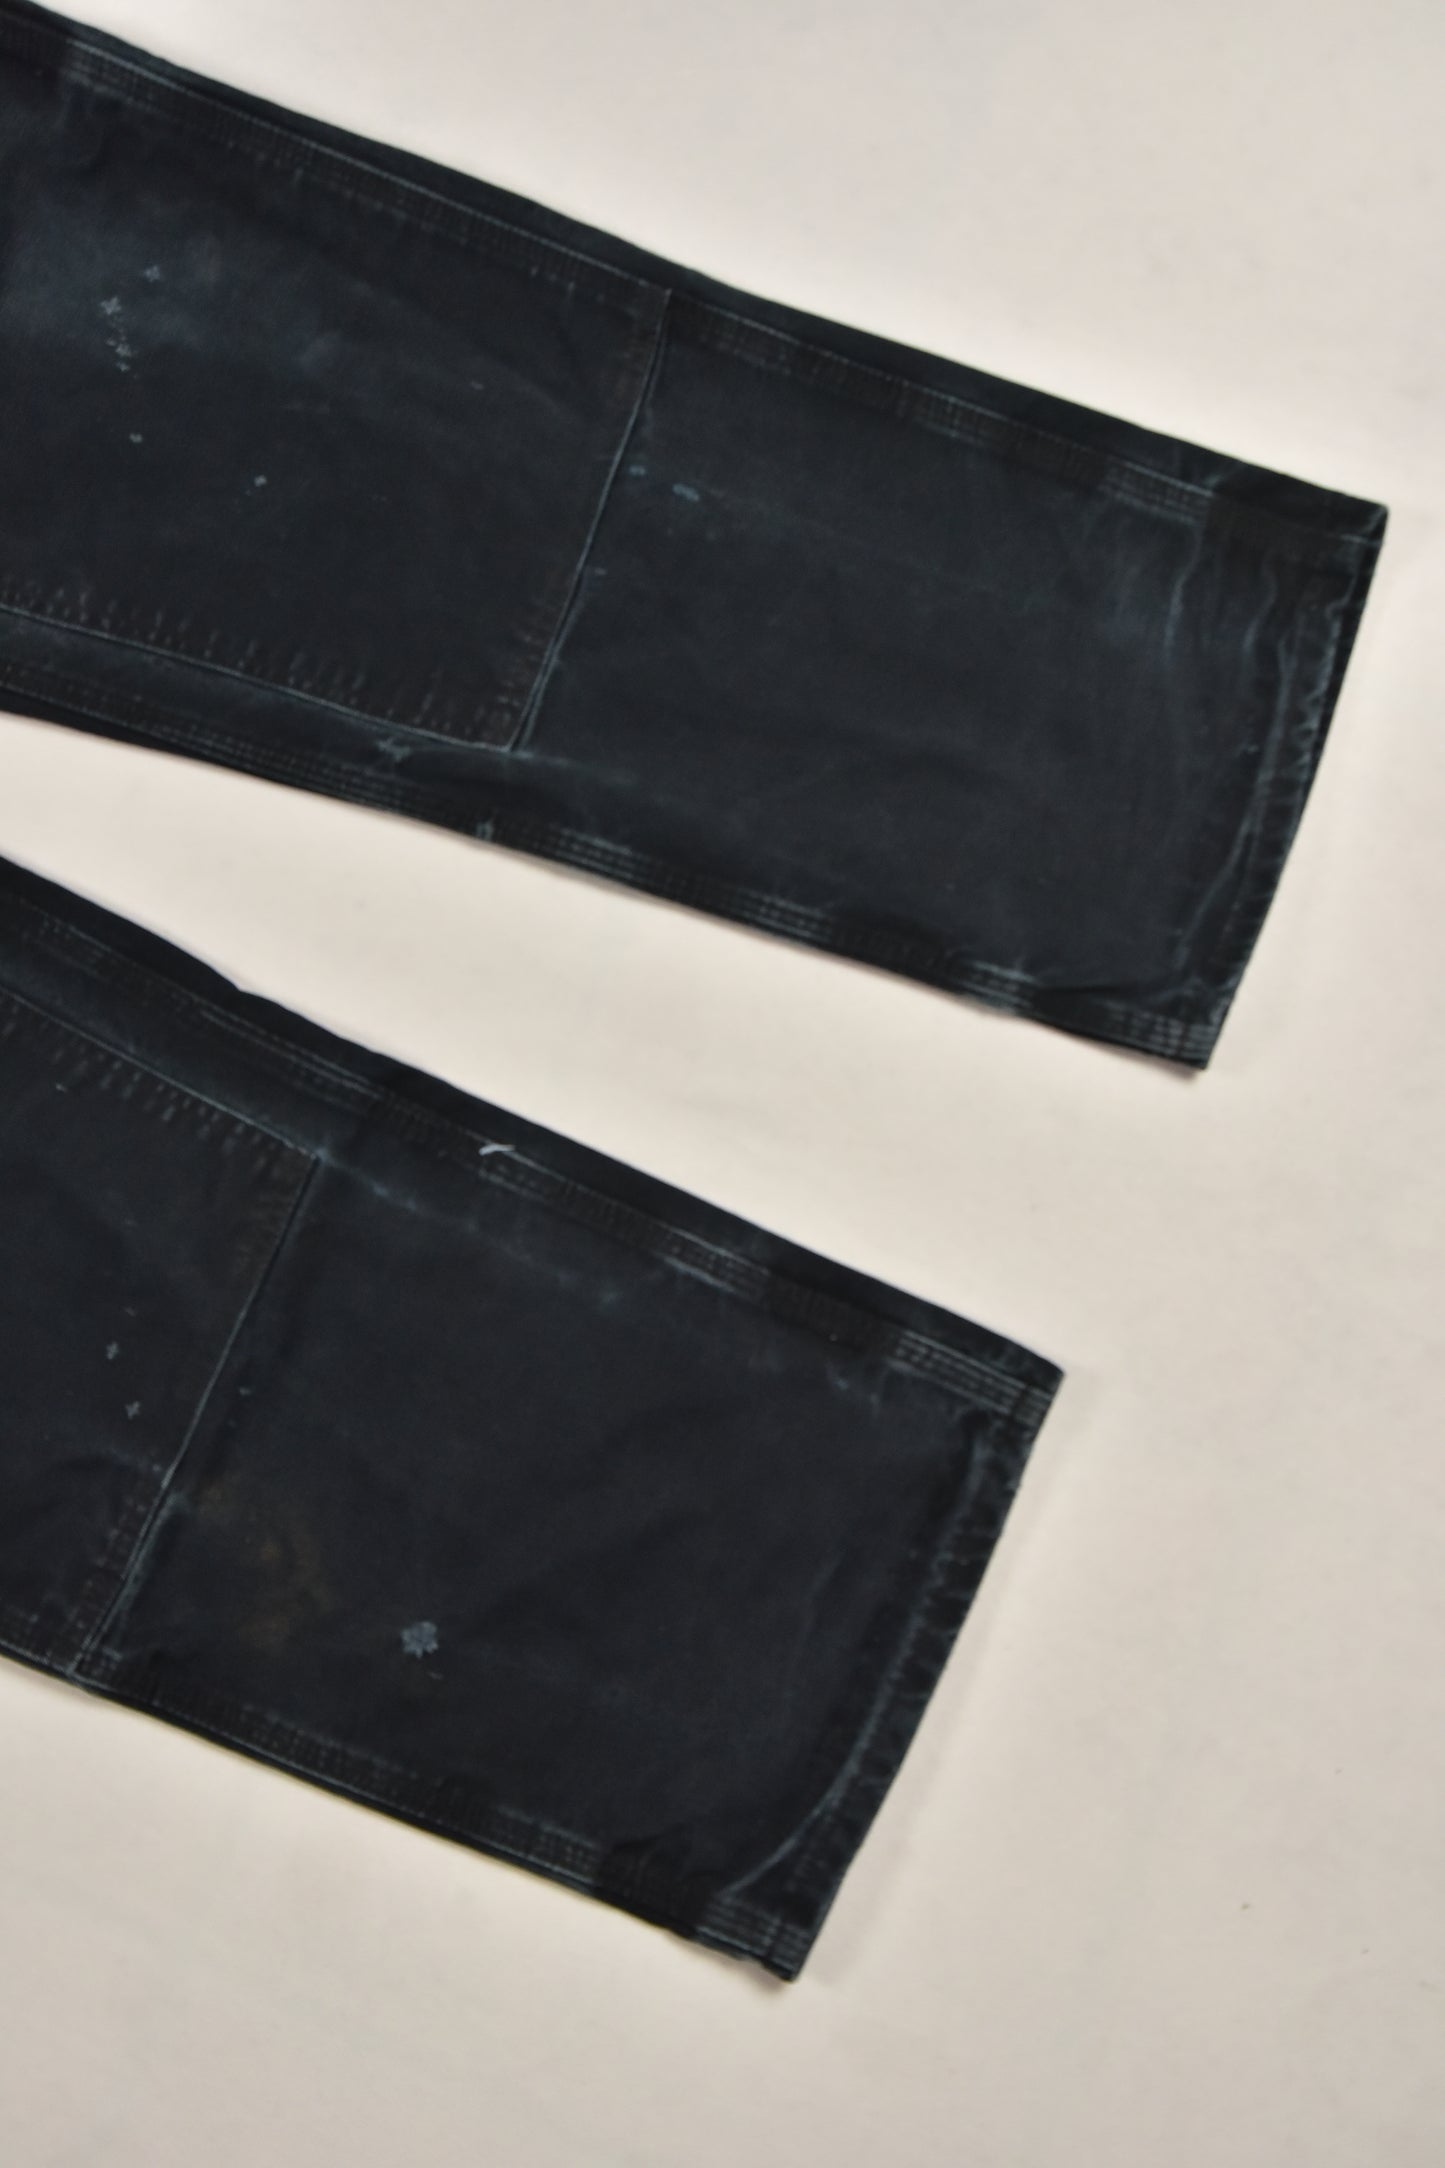 Pantaloni Carhartt Double Knee Workwear Vintage Made in USA / 40x34